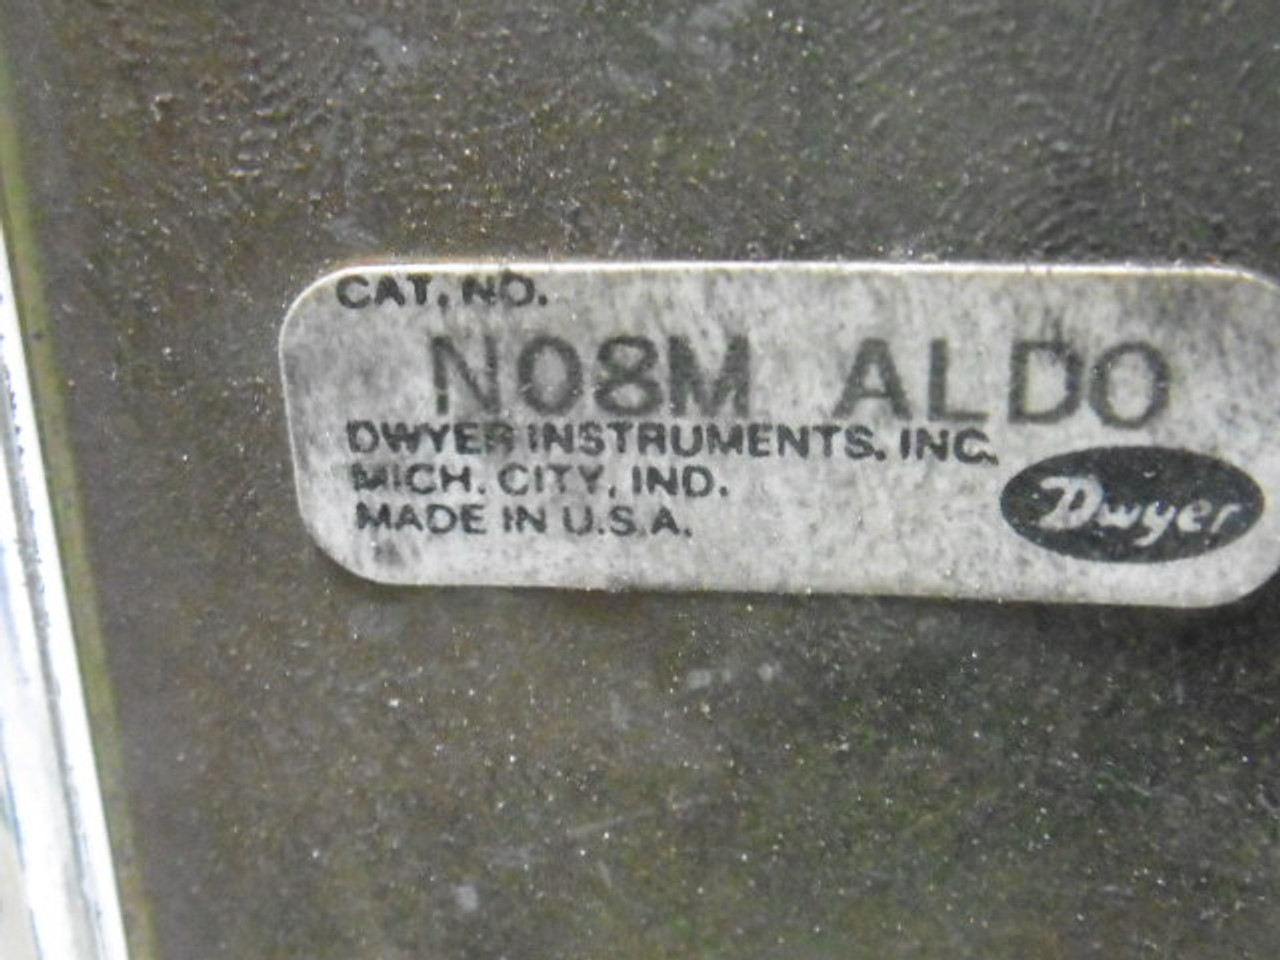 Dwyer N08M-ALDO Photohelic Switch Gauge Transmitter 120VAC 50/60HZ 5 Watts USED